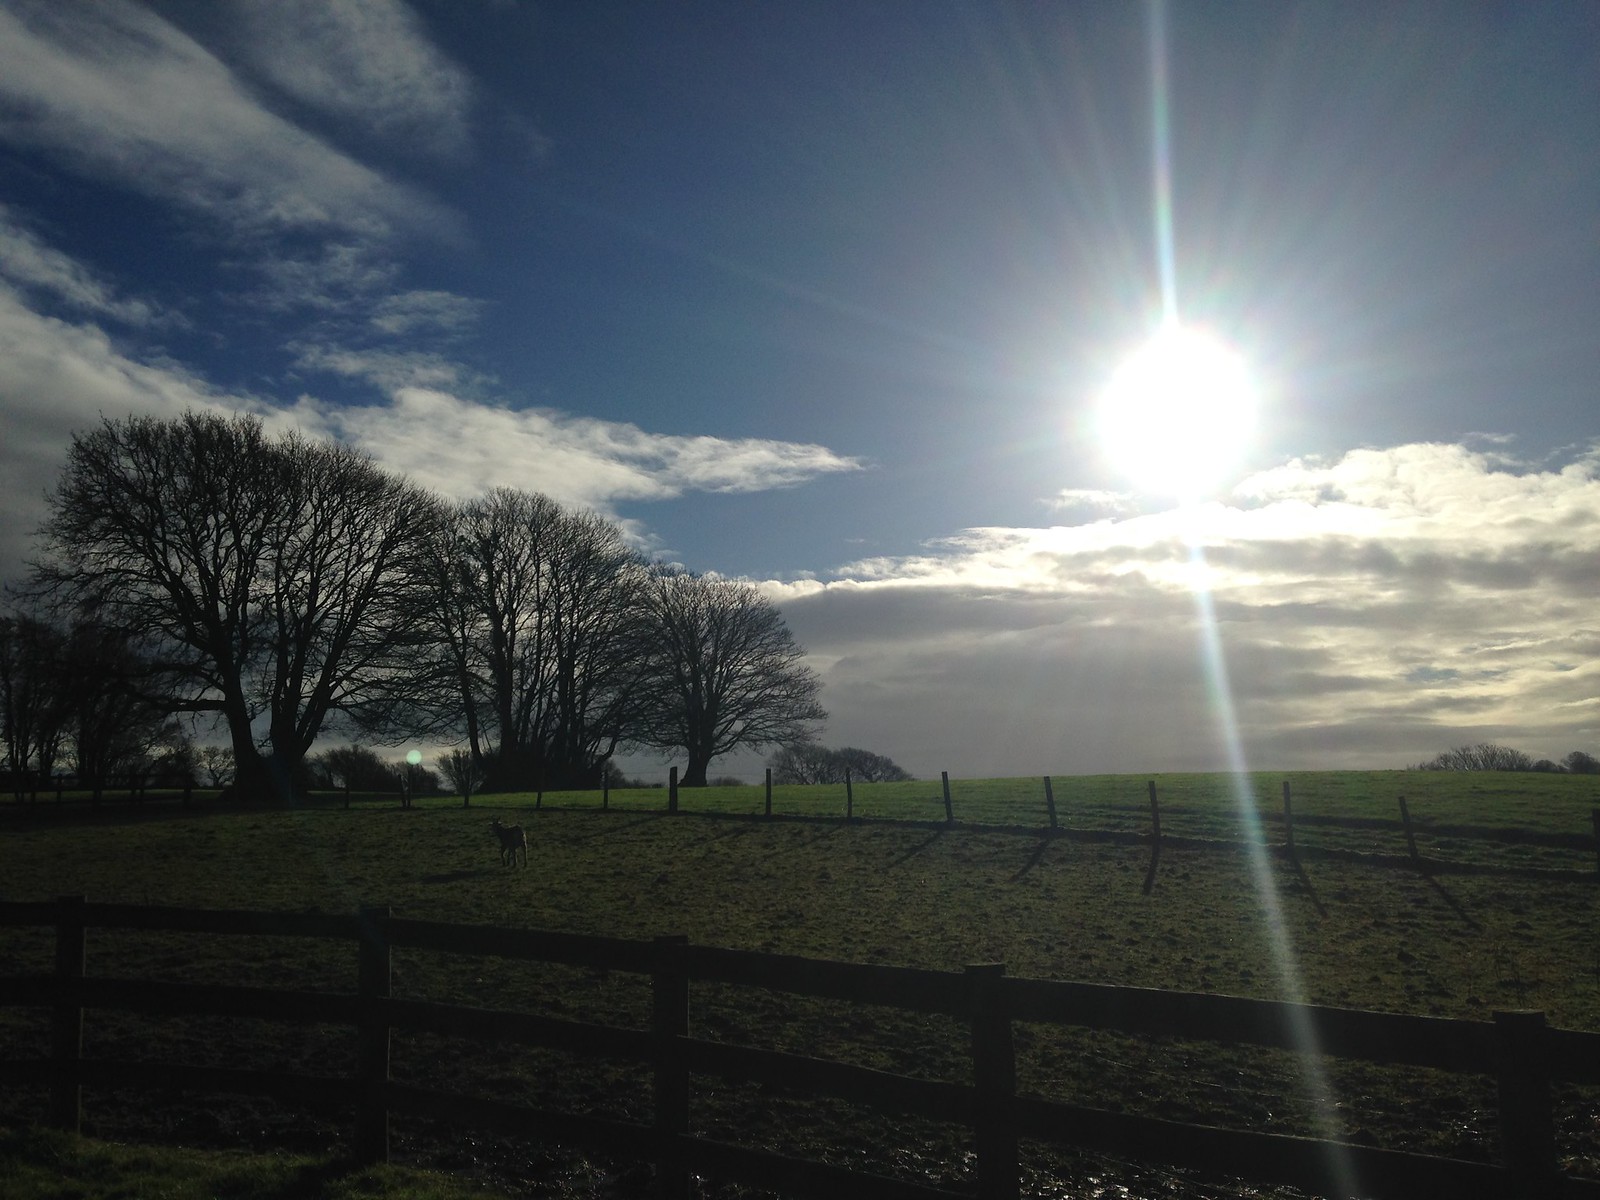 Winter Sun over the fields